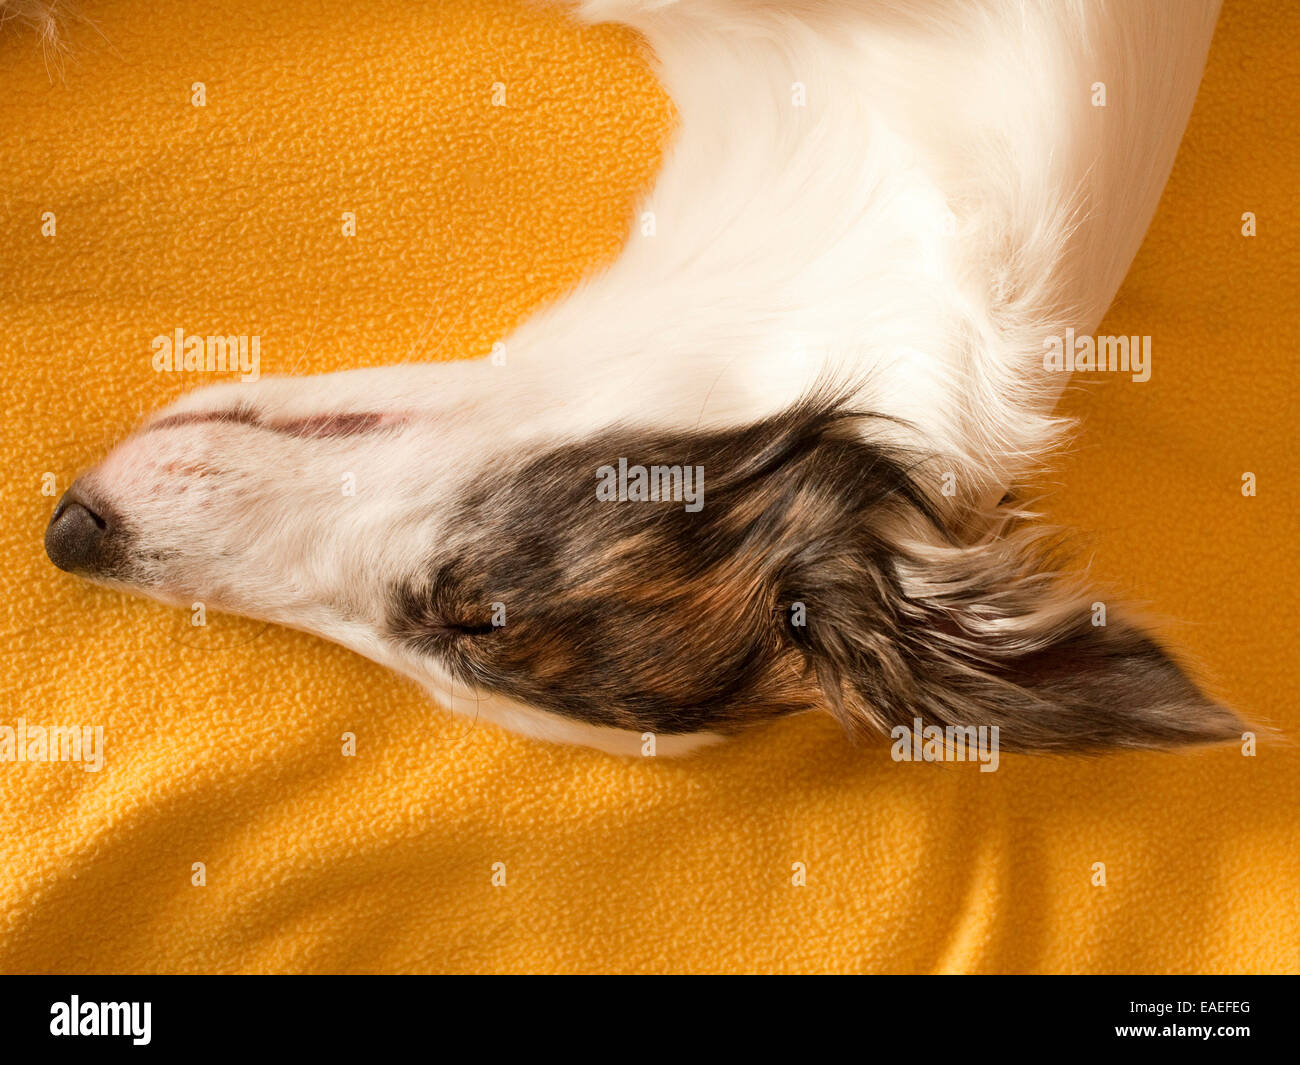 sleeping dog on bed Stock Photo